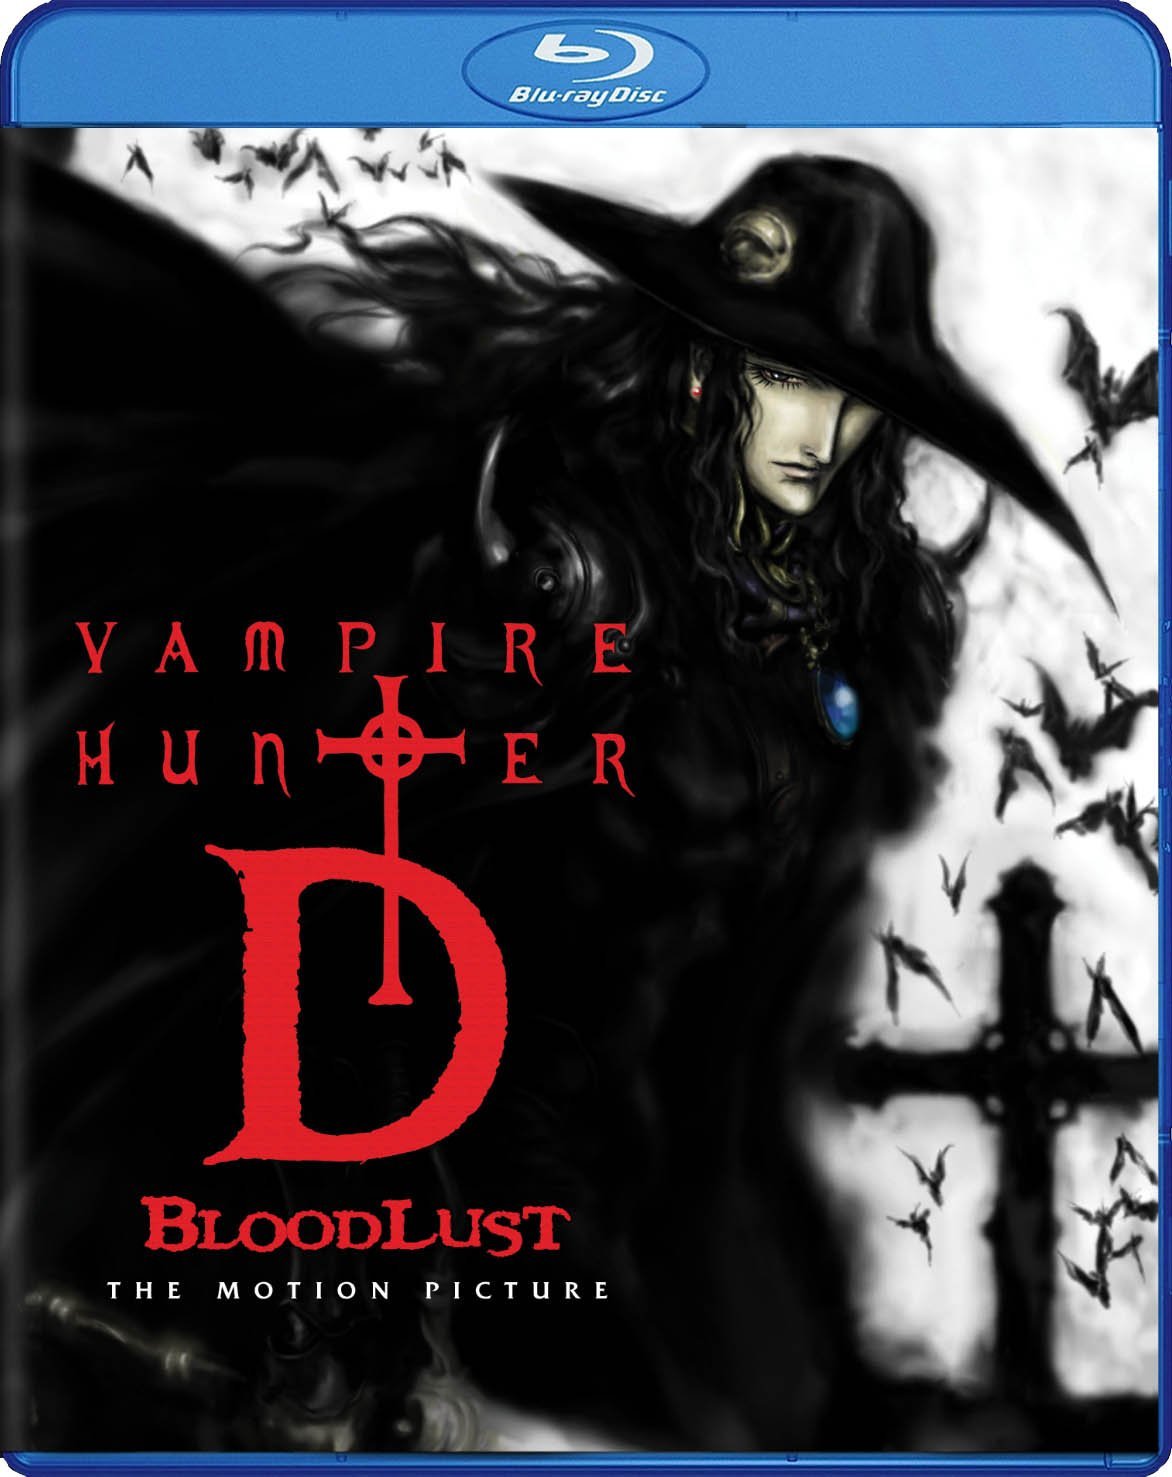 Vampire Hunter D: Bloodlust review